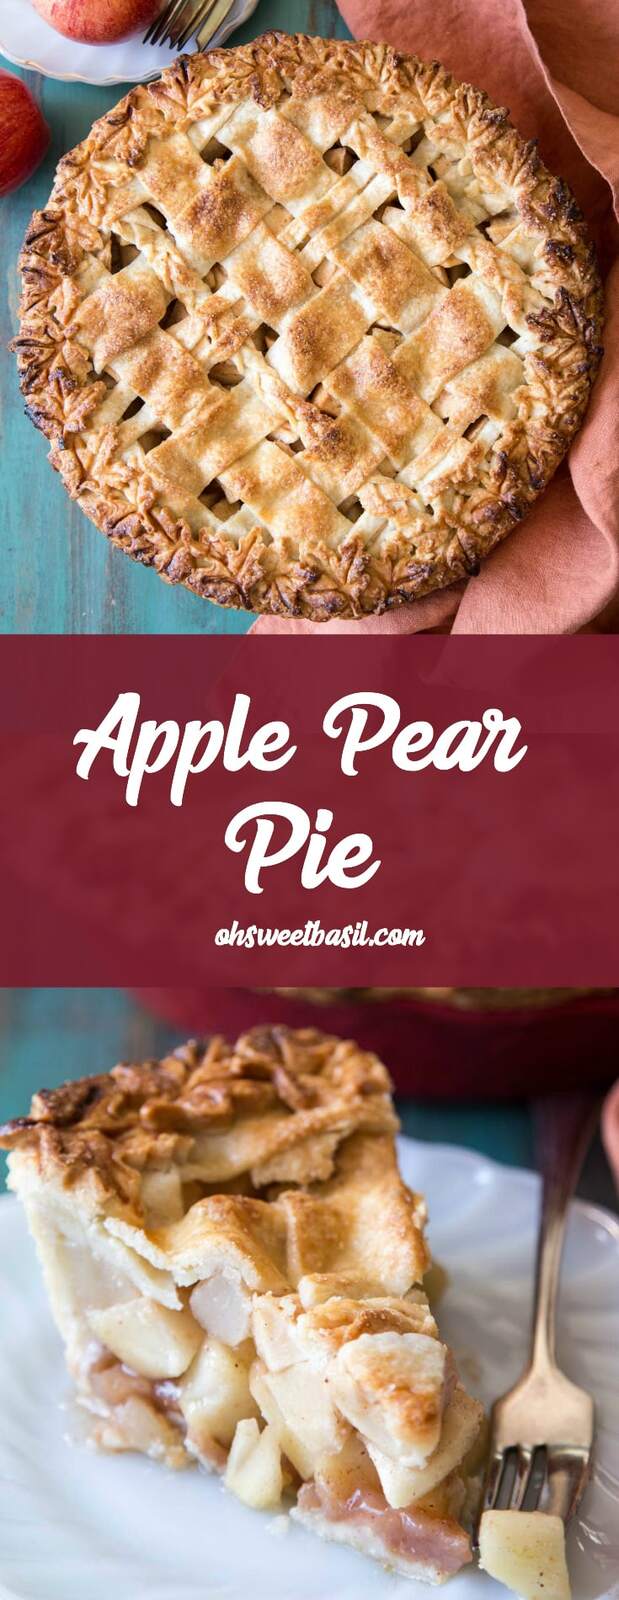 Apple-Pear-Pie-ohsweetbasil.com_.jpg